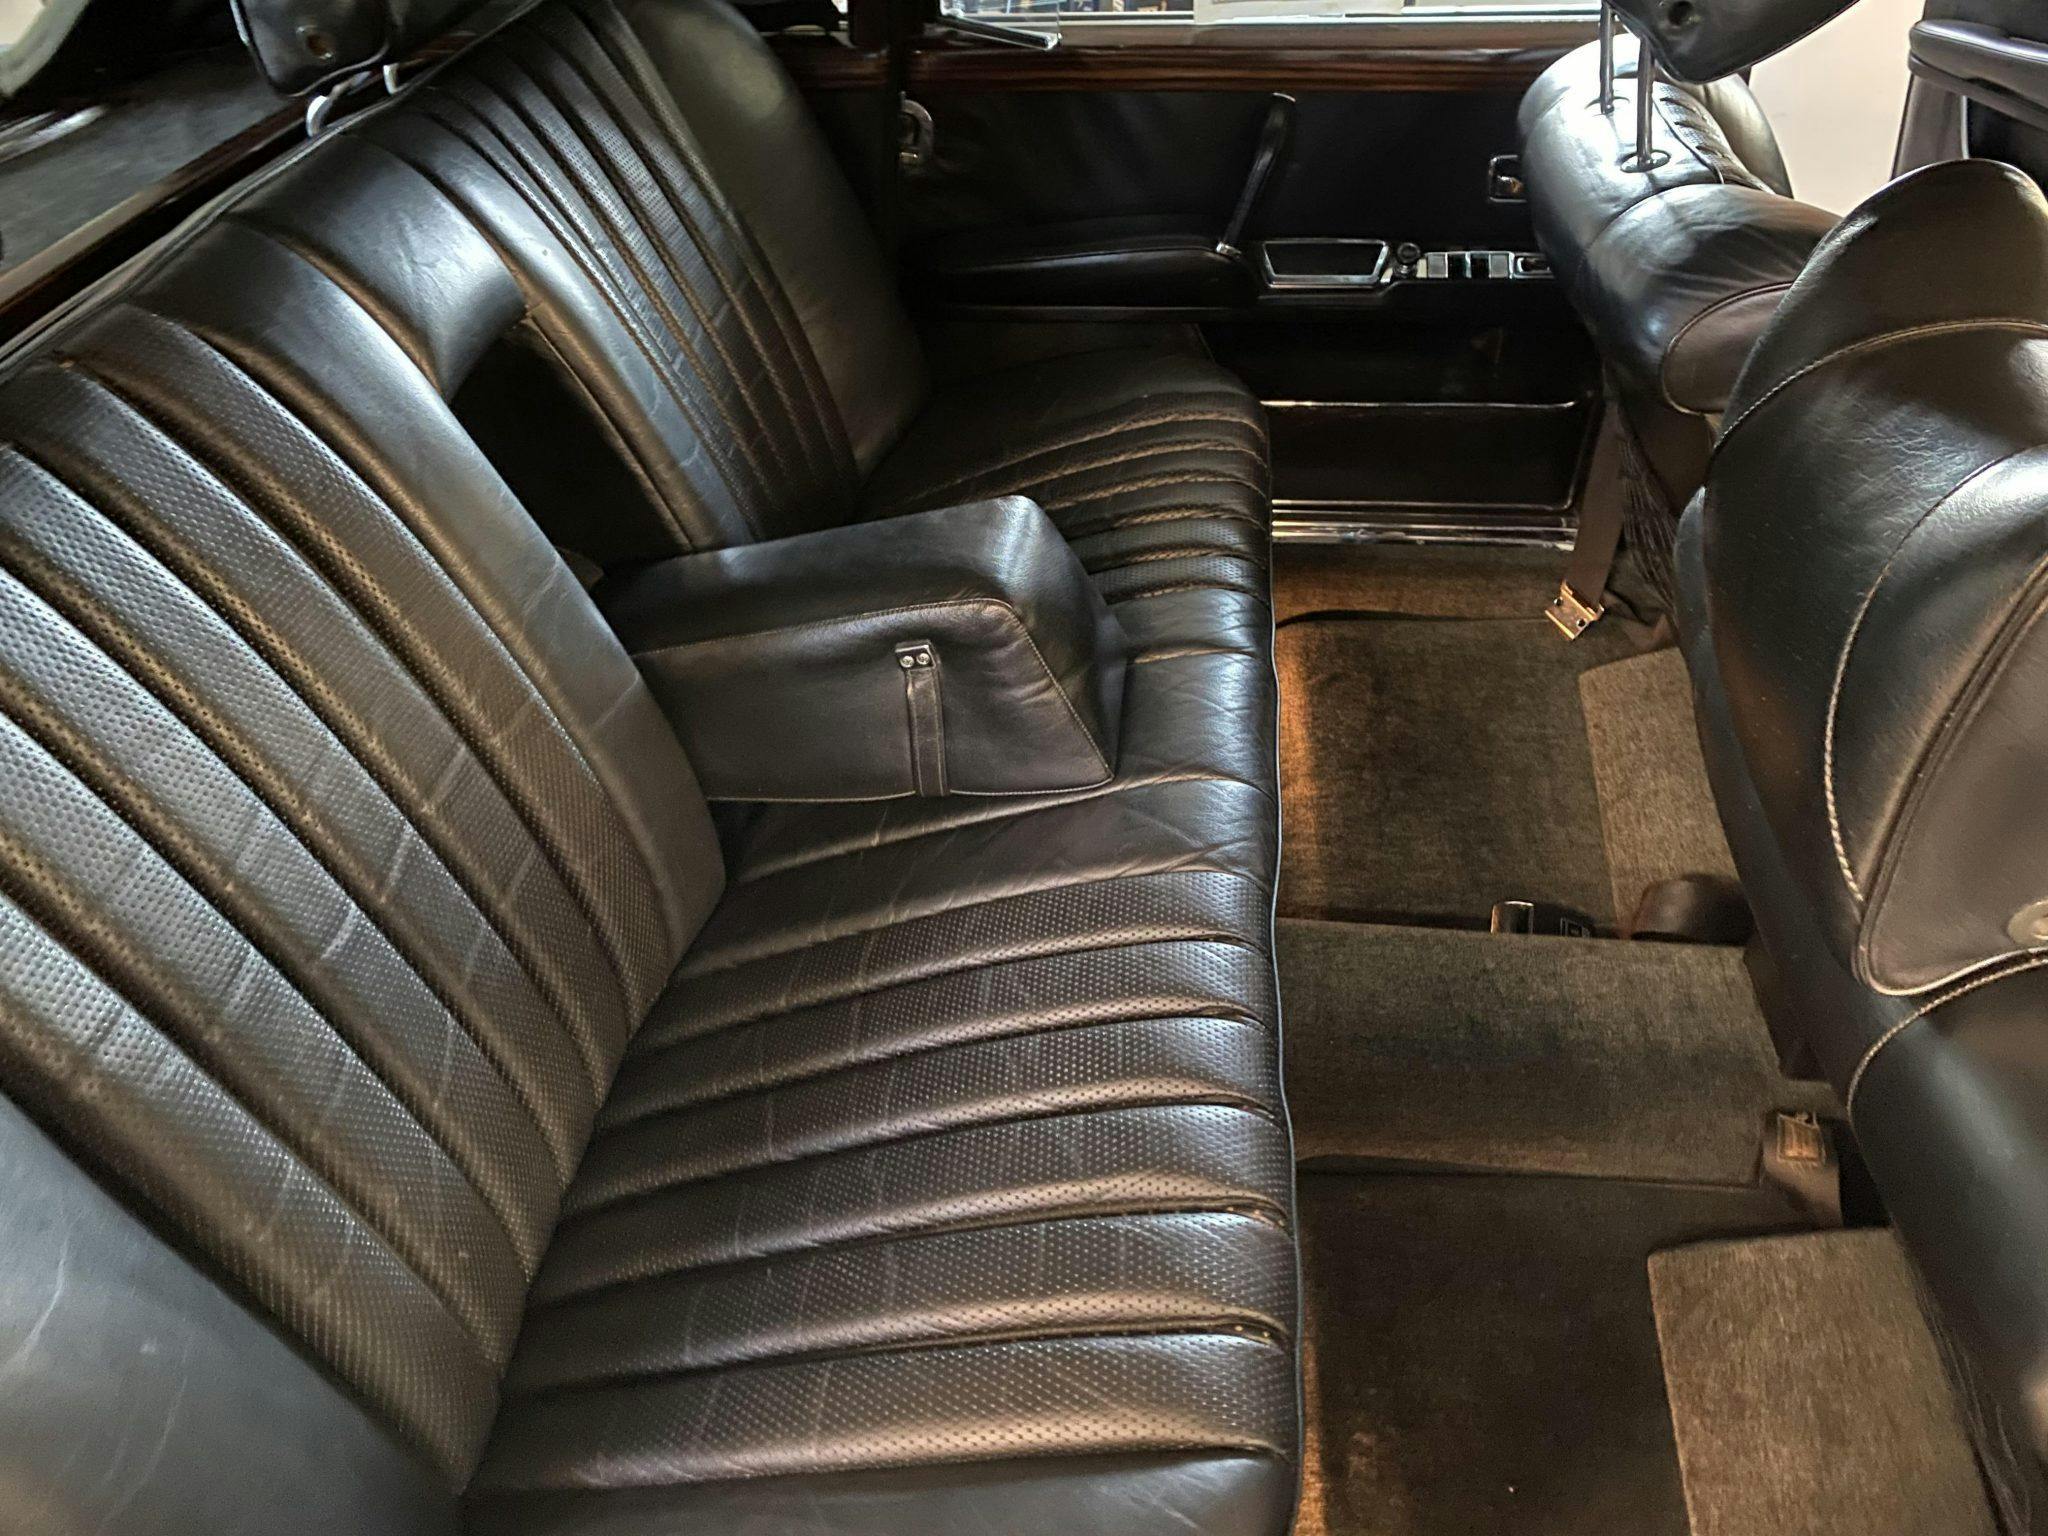 1969 Mercedes-Benz 600 Elvis car interior rear seat